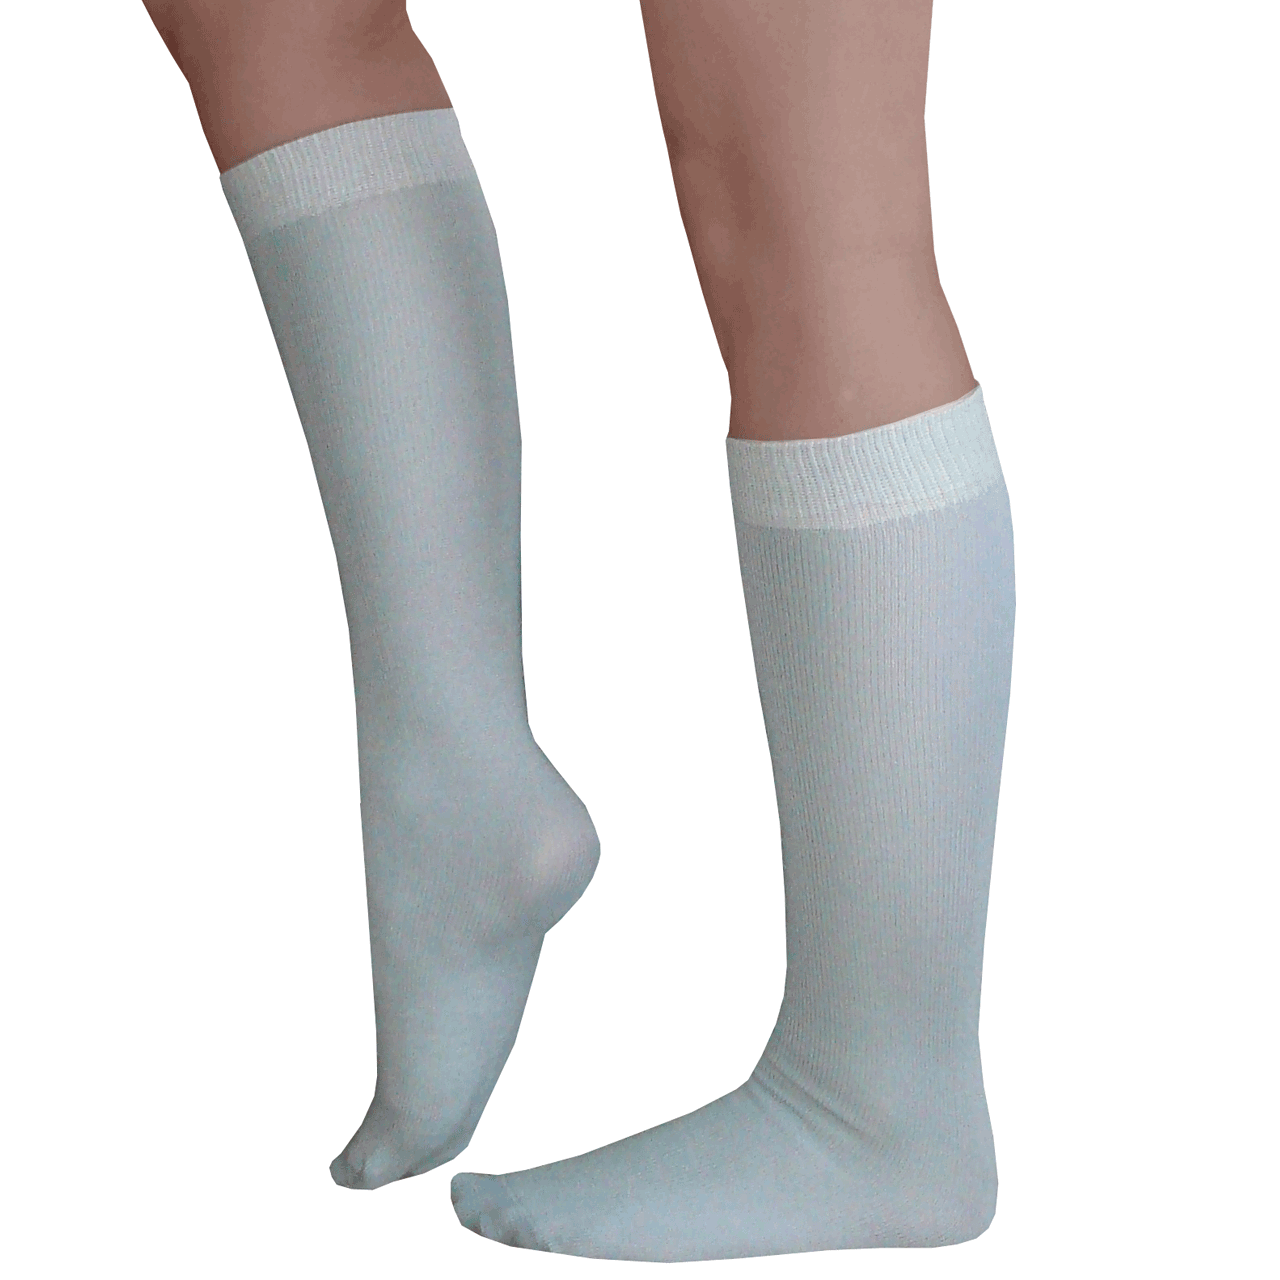 Thin Gray Knee High Socks